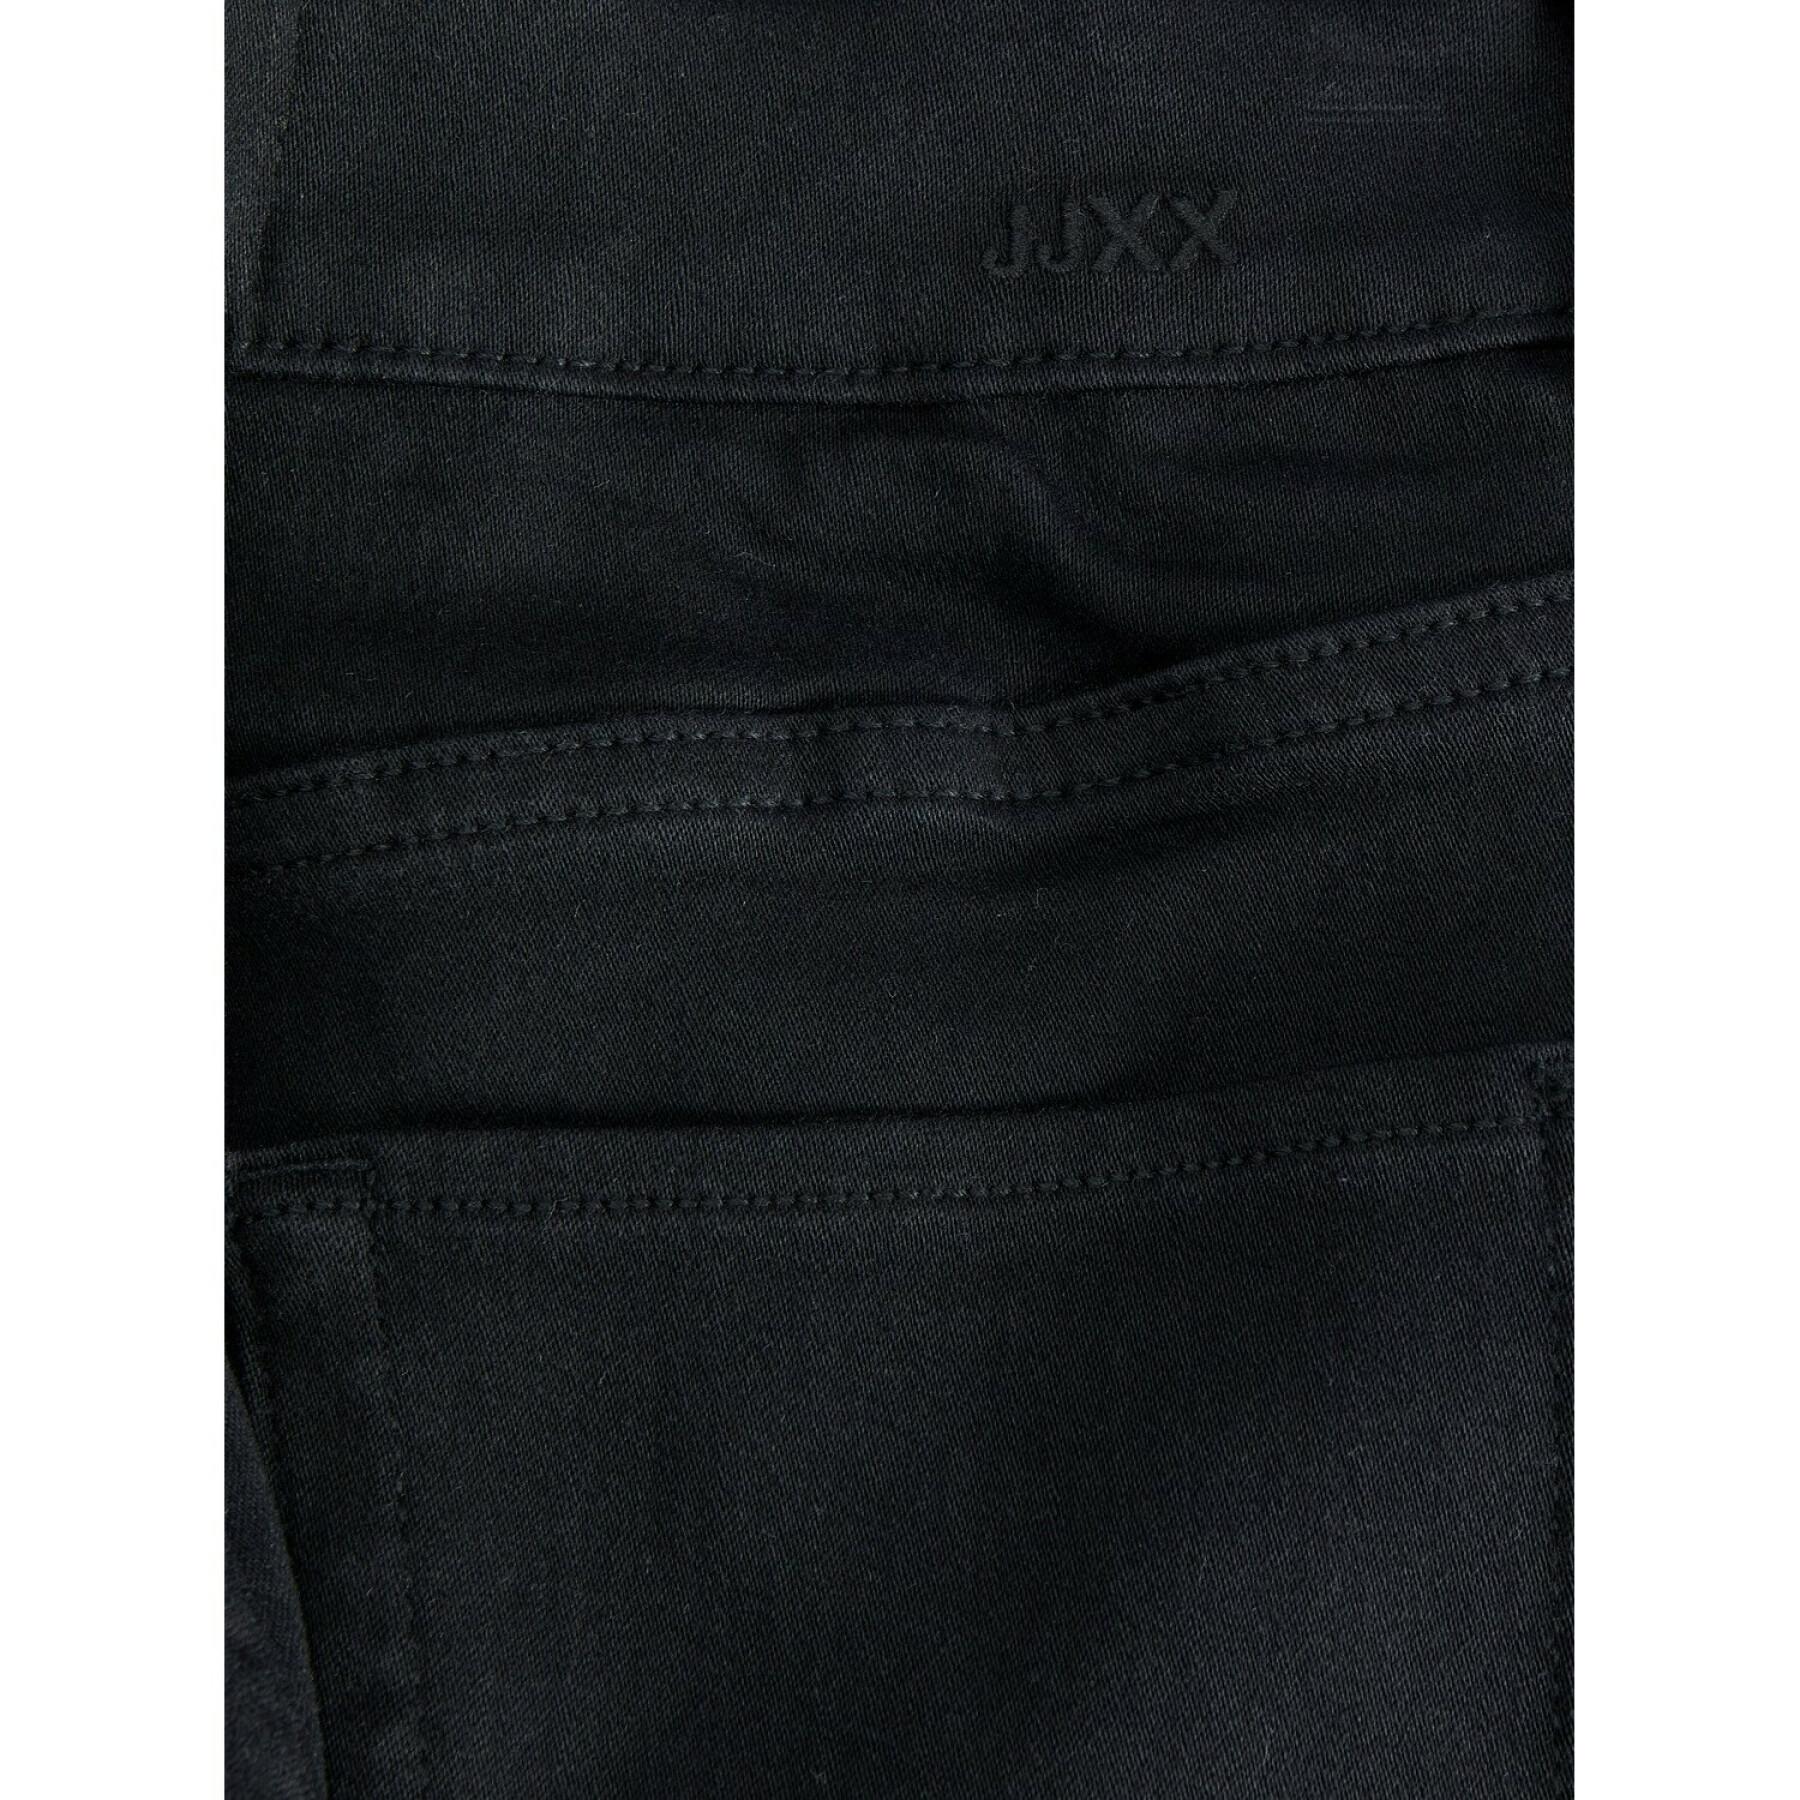 Women's jeans JJXX vienna skinny ns1011a